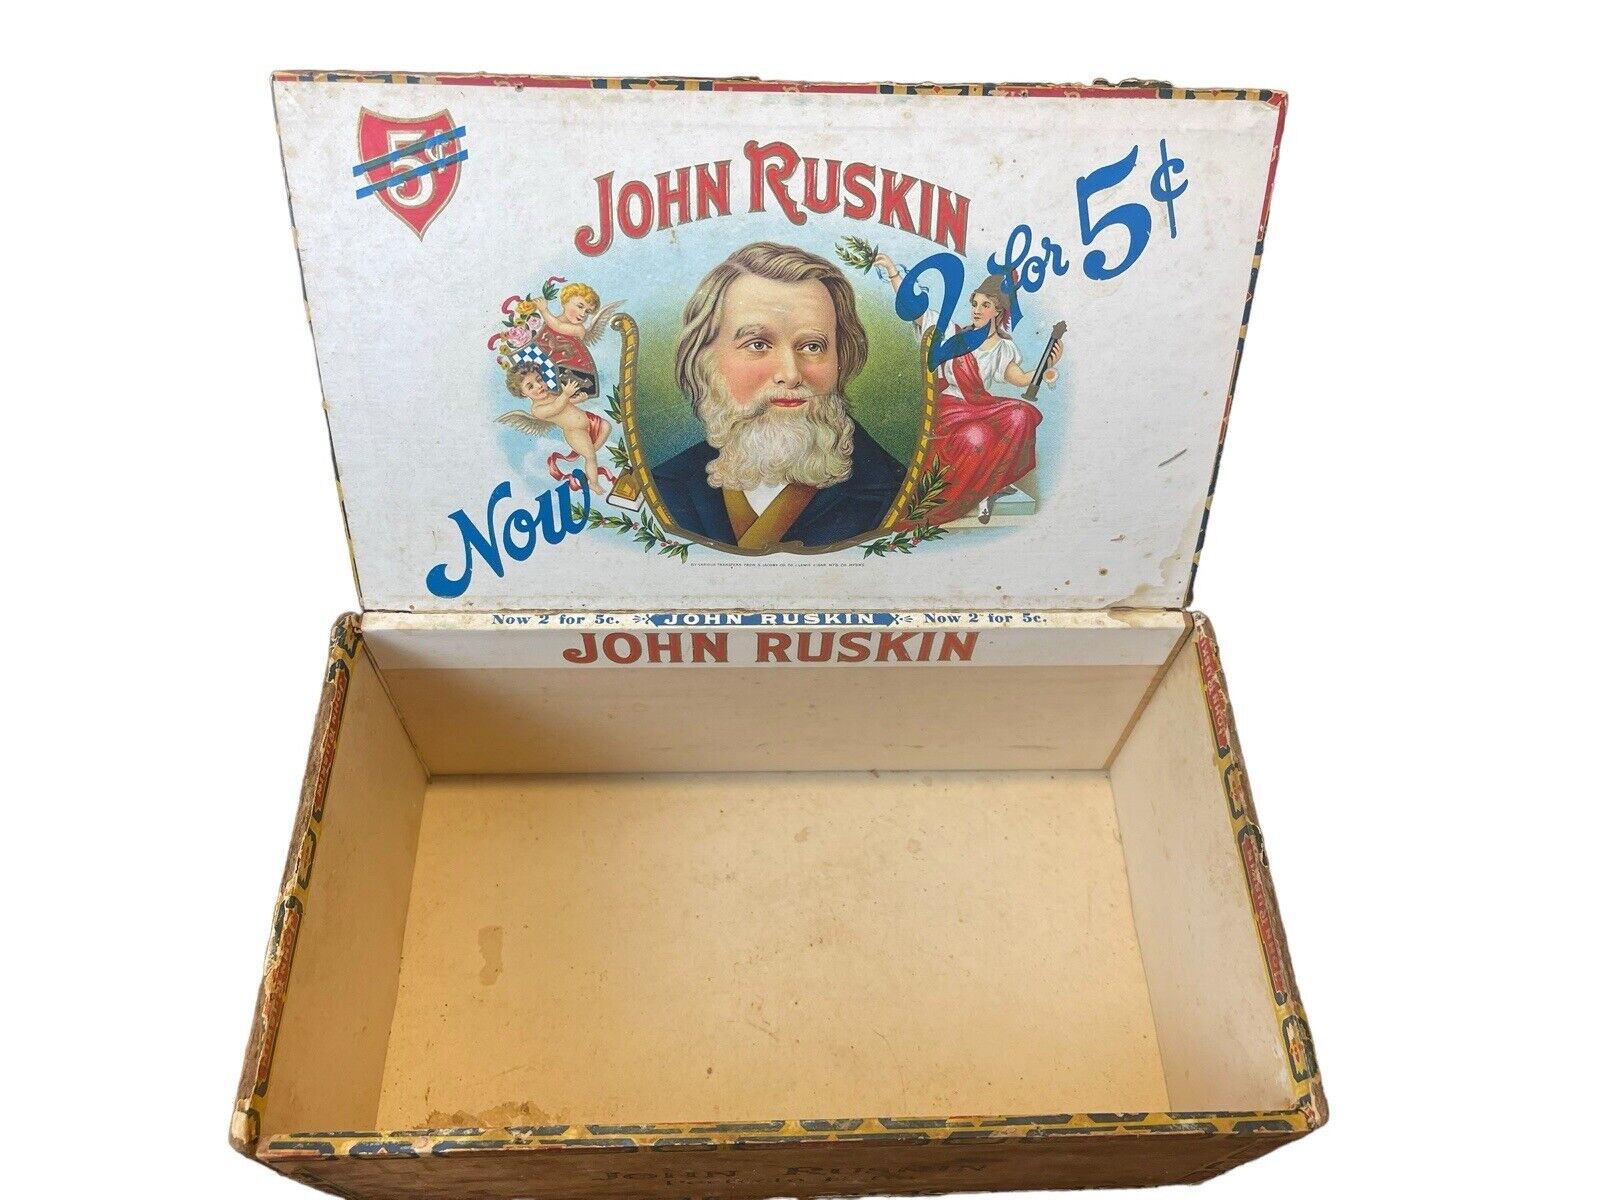 John Ruskin Best And Biggest Cigar Box 1930s Stamp I. Lewis Cigar Co Newark N.J.